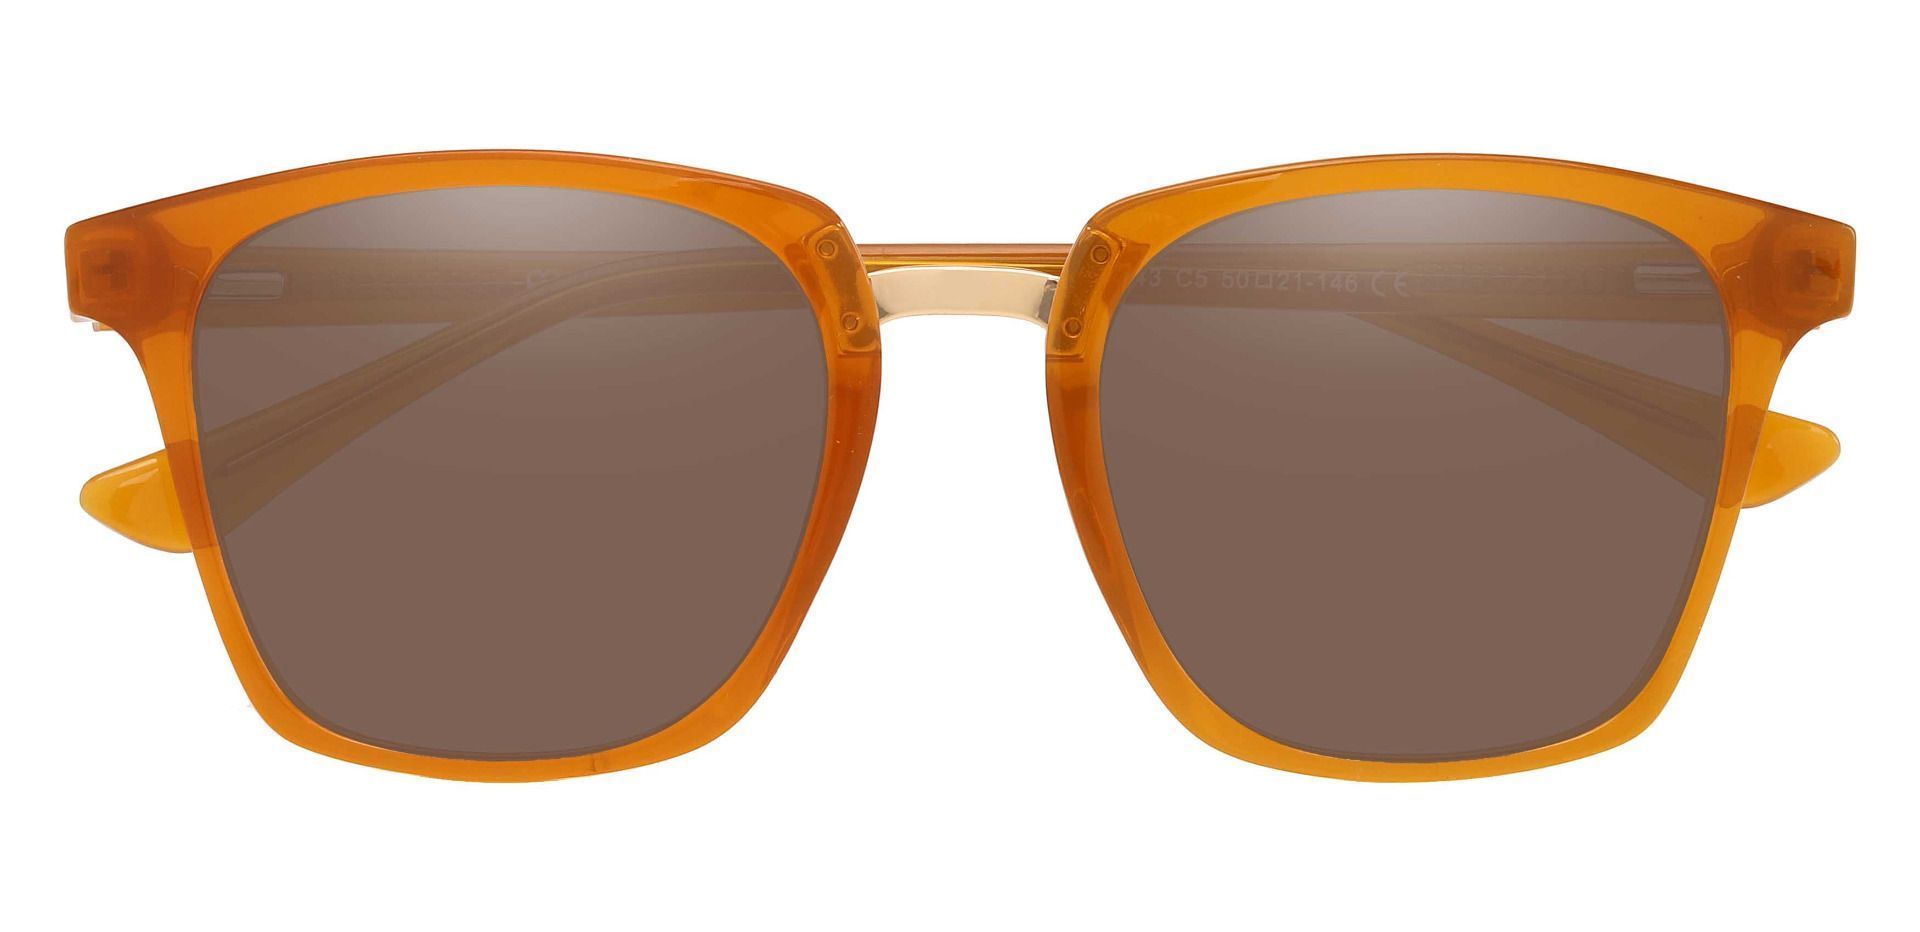 Delta Square Lined Bifocal Sunglasses - Orange Frame With Brown Lenses